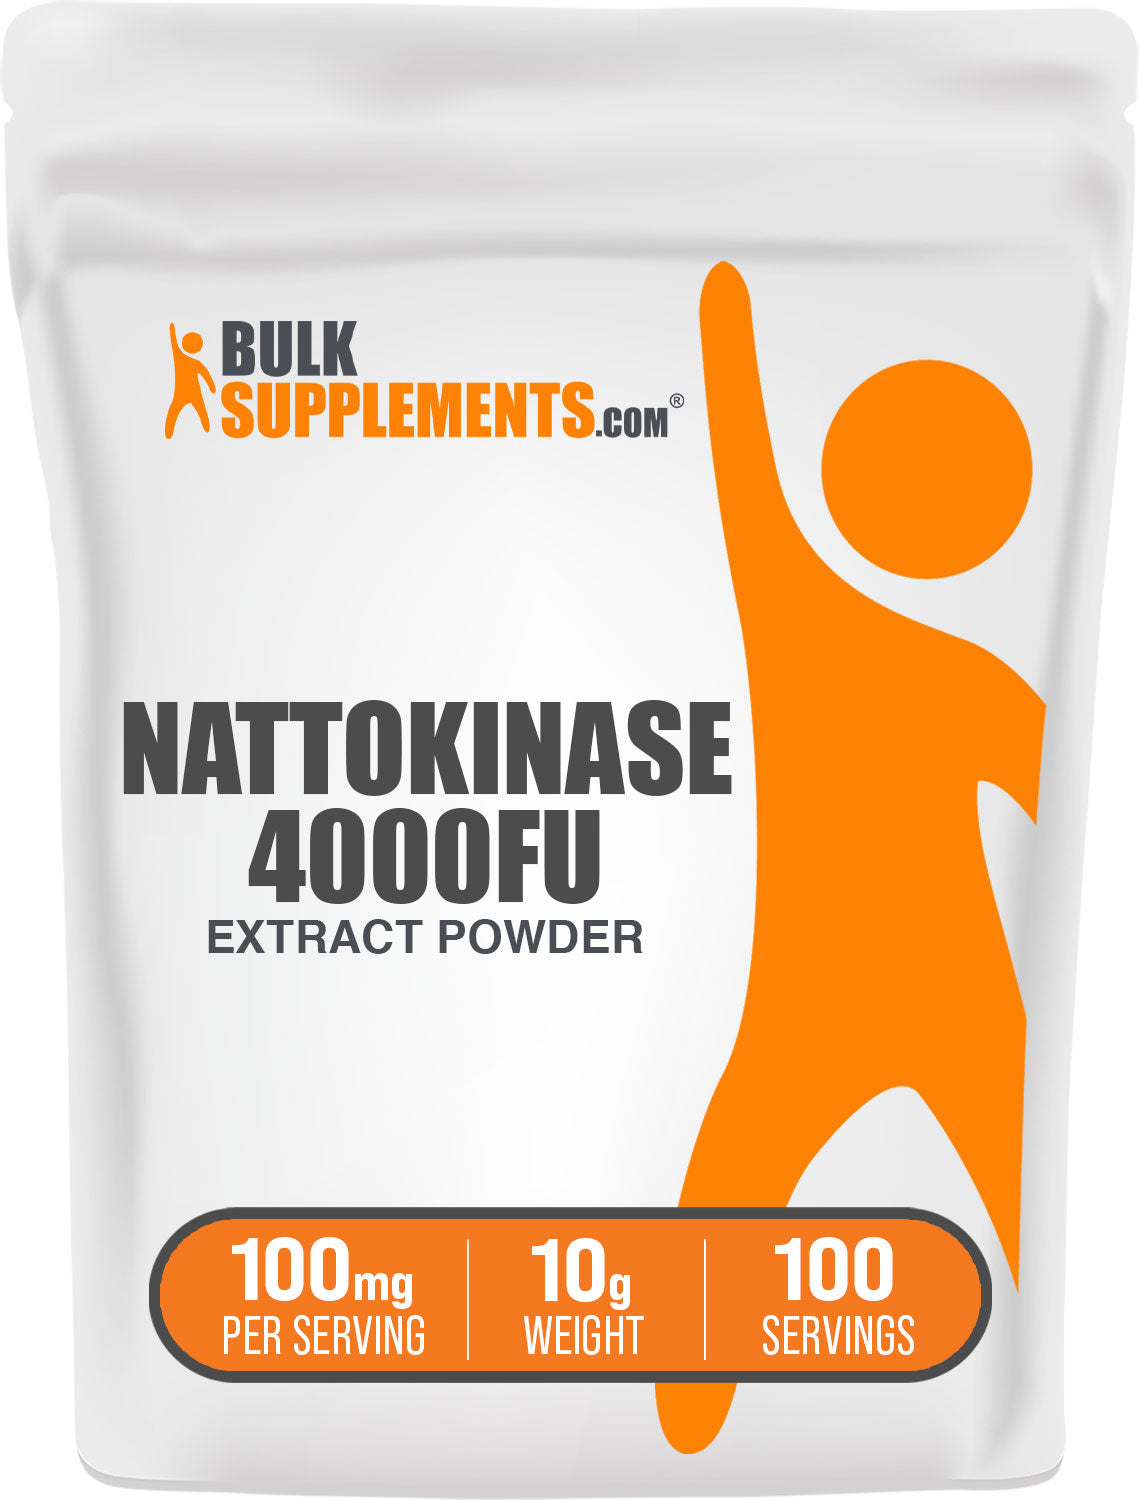 BulkSupplements.com Nattokinase Extract Powder 4000FU 10g bag